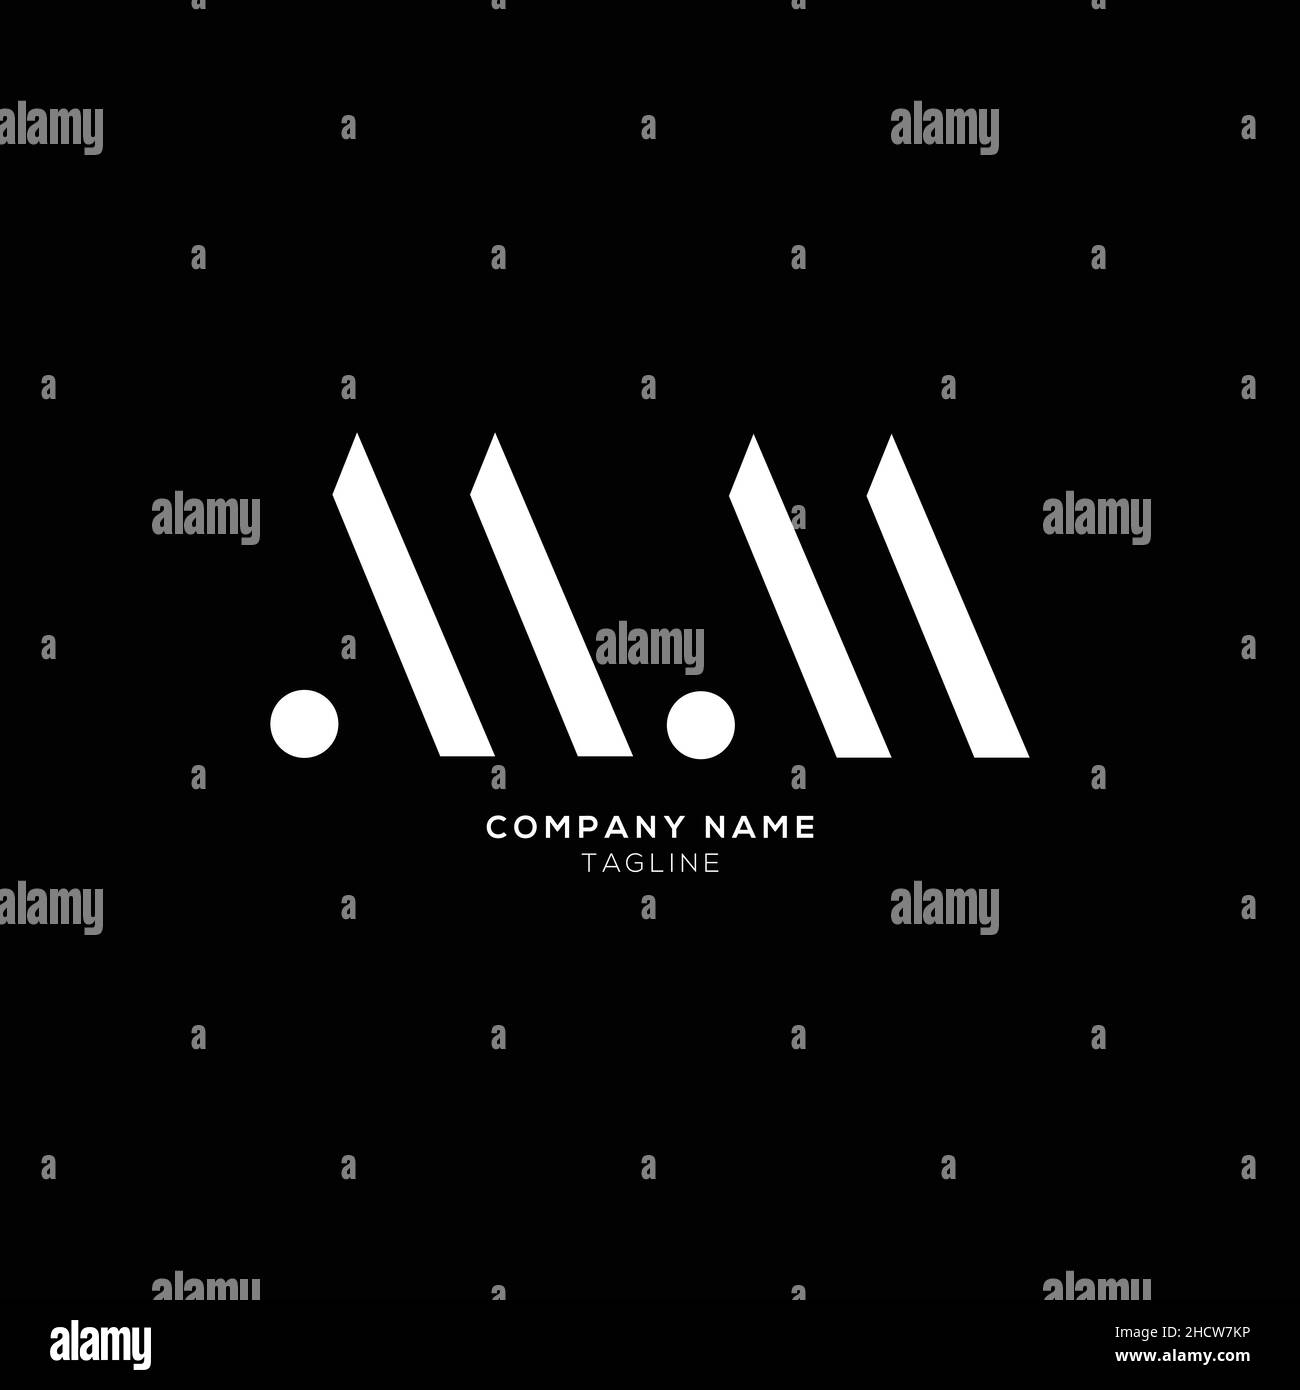 creative mm logo design